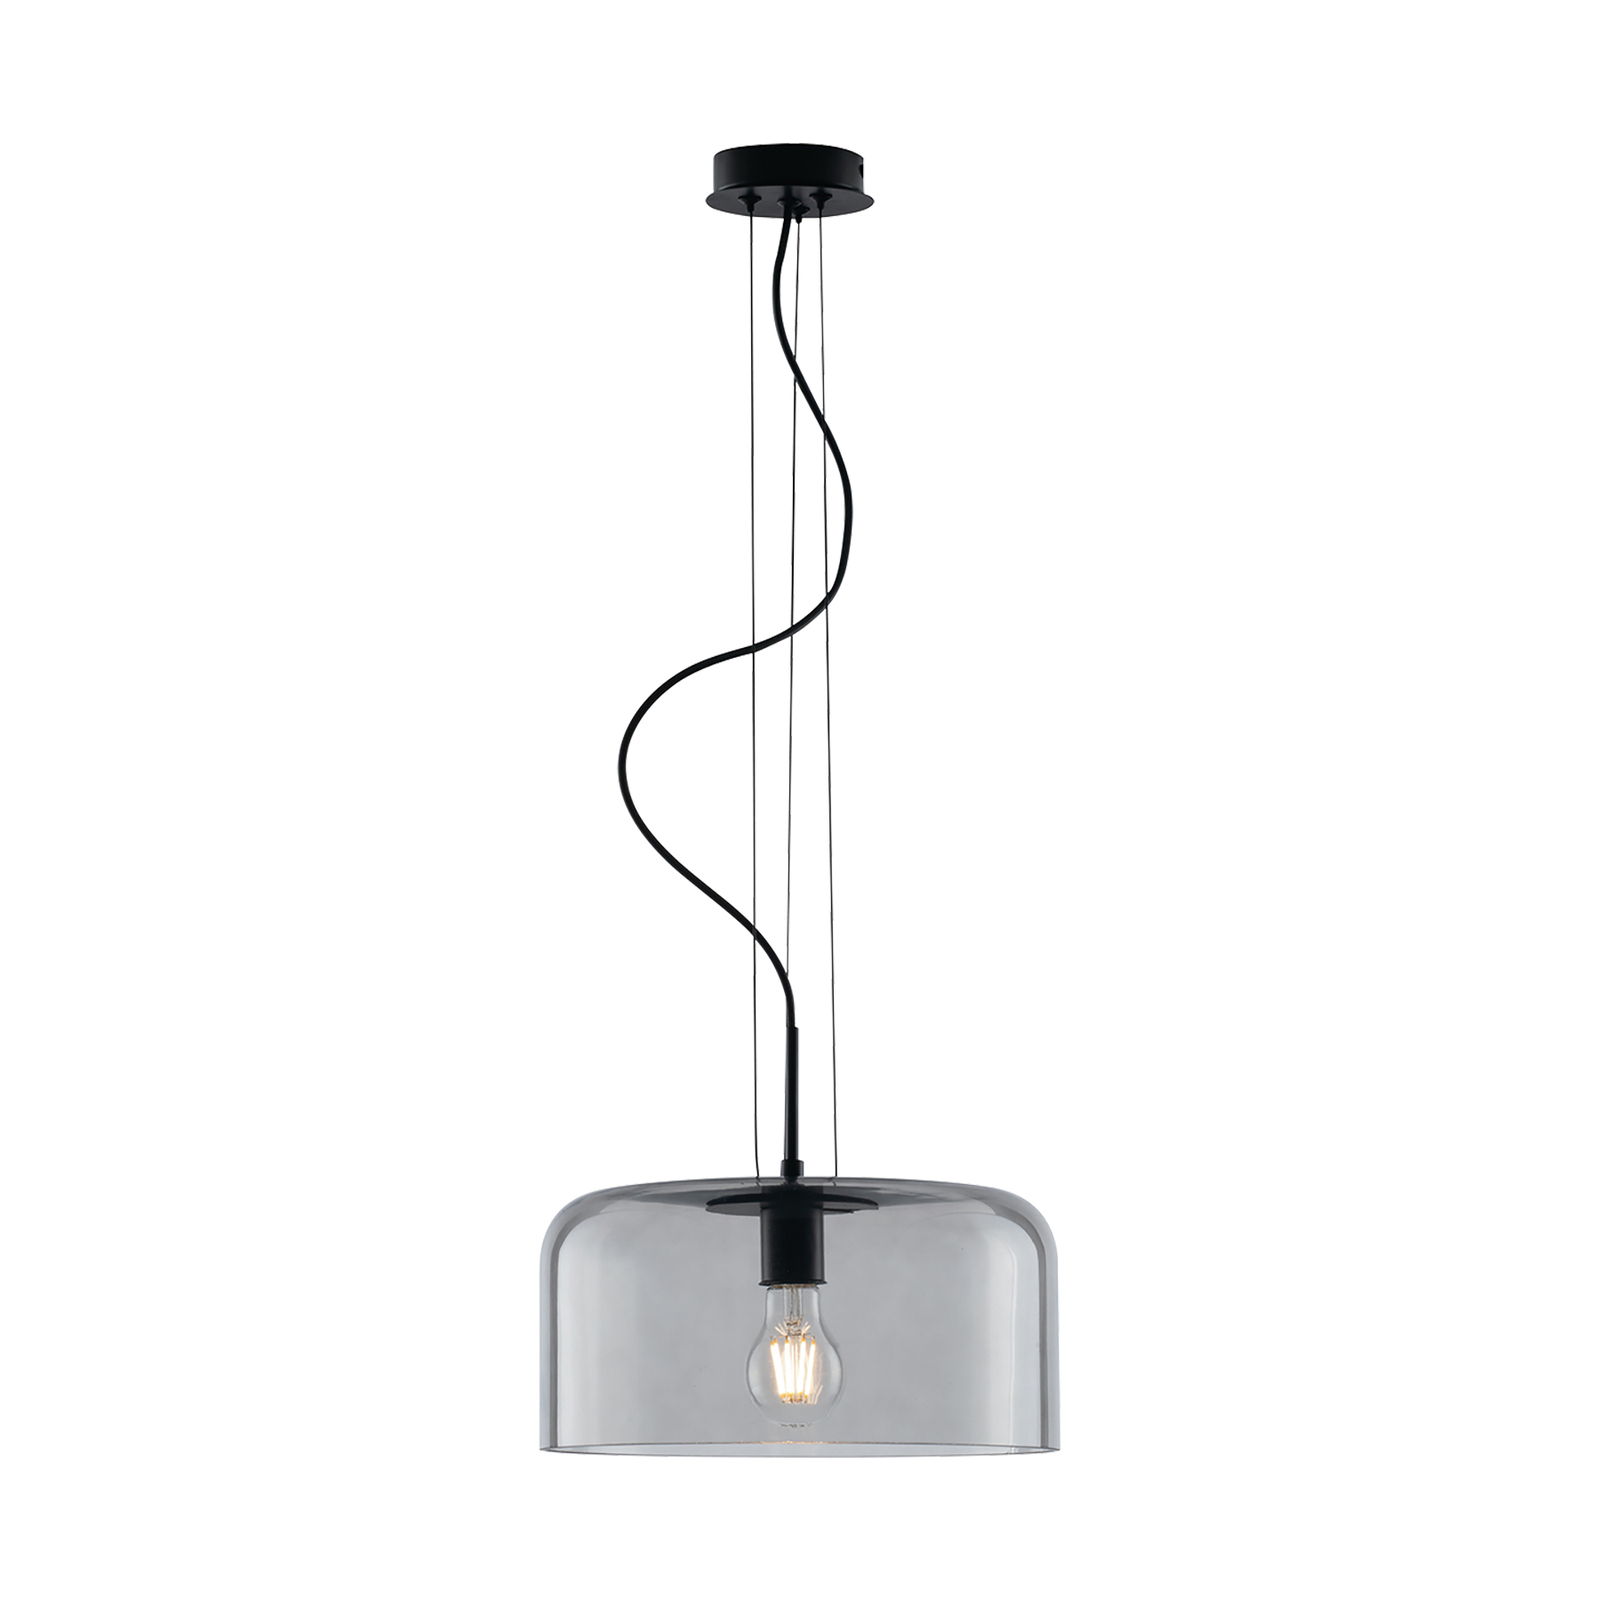 Gibus S30 pendant light, glass lampshade, grey